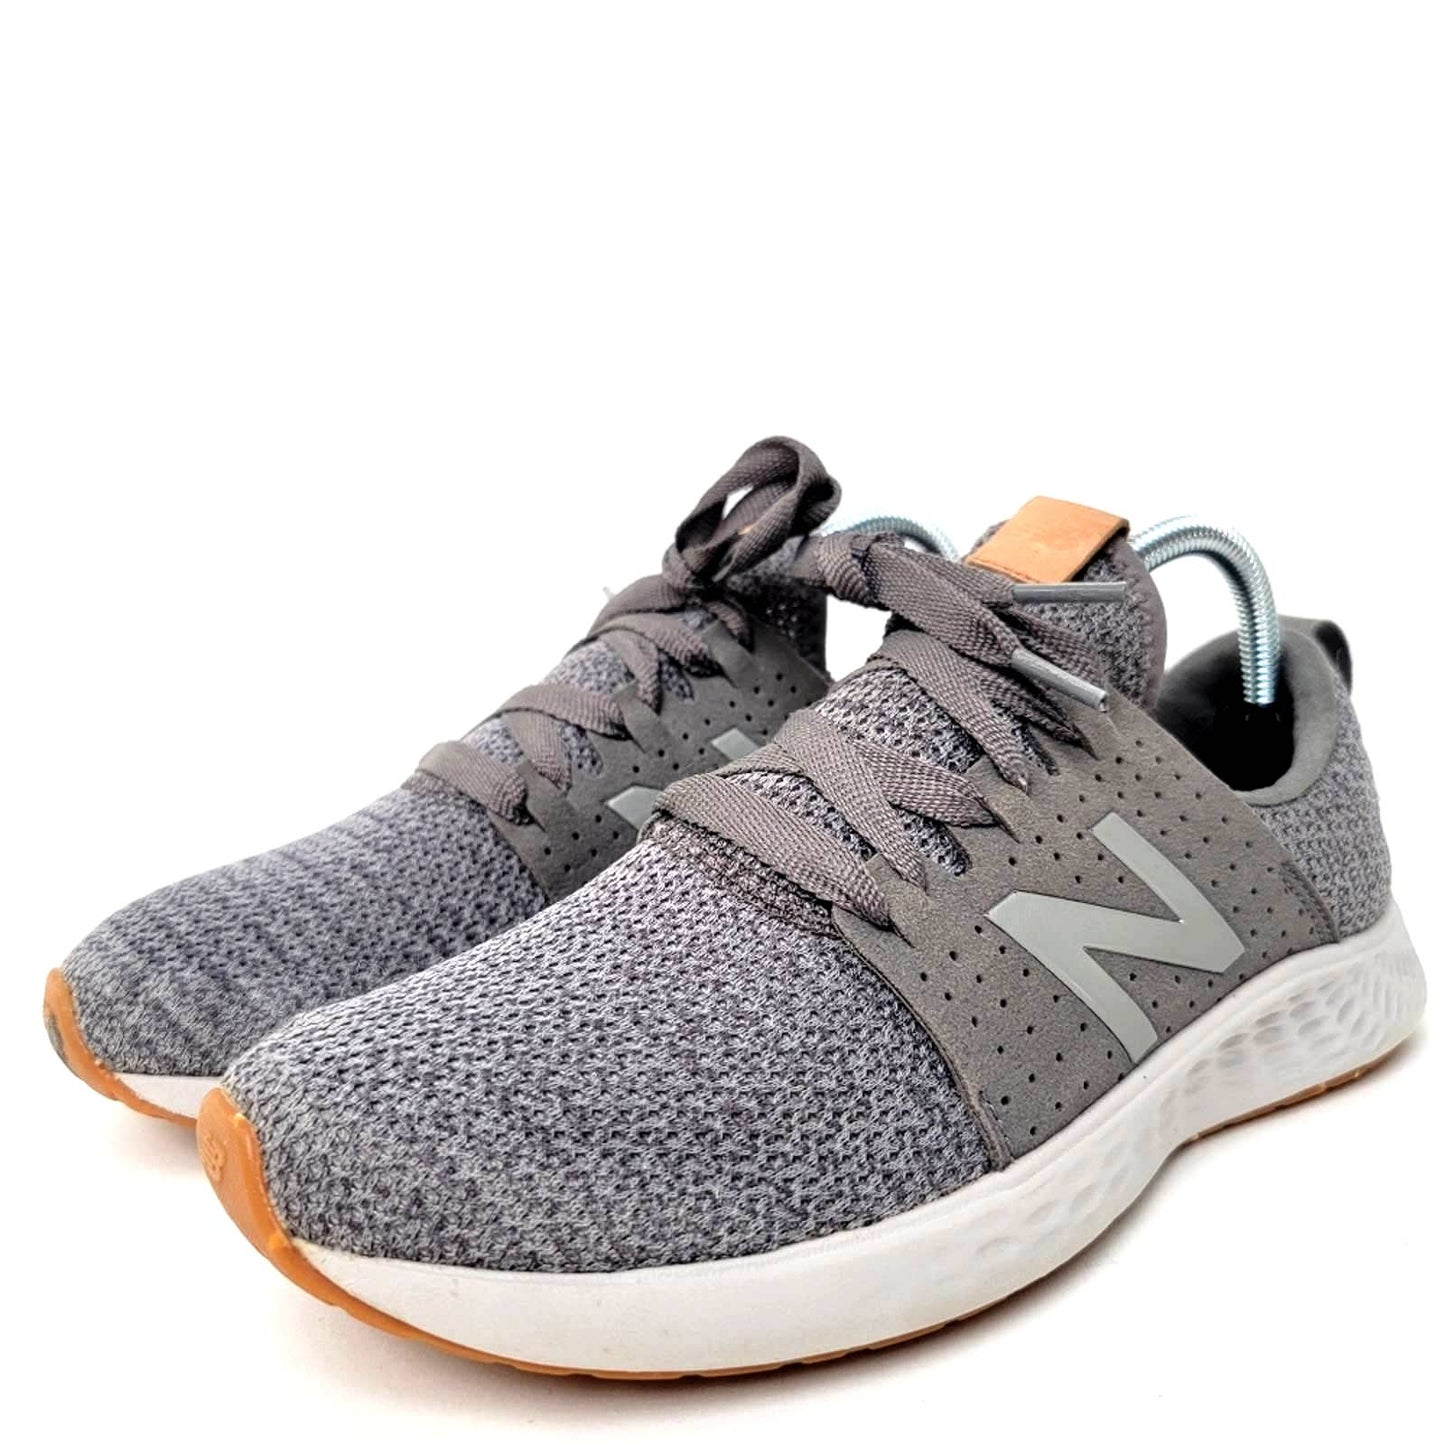 New Balance Fresh Foam Sport V1 Running Shoes - 9.5